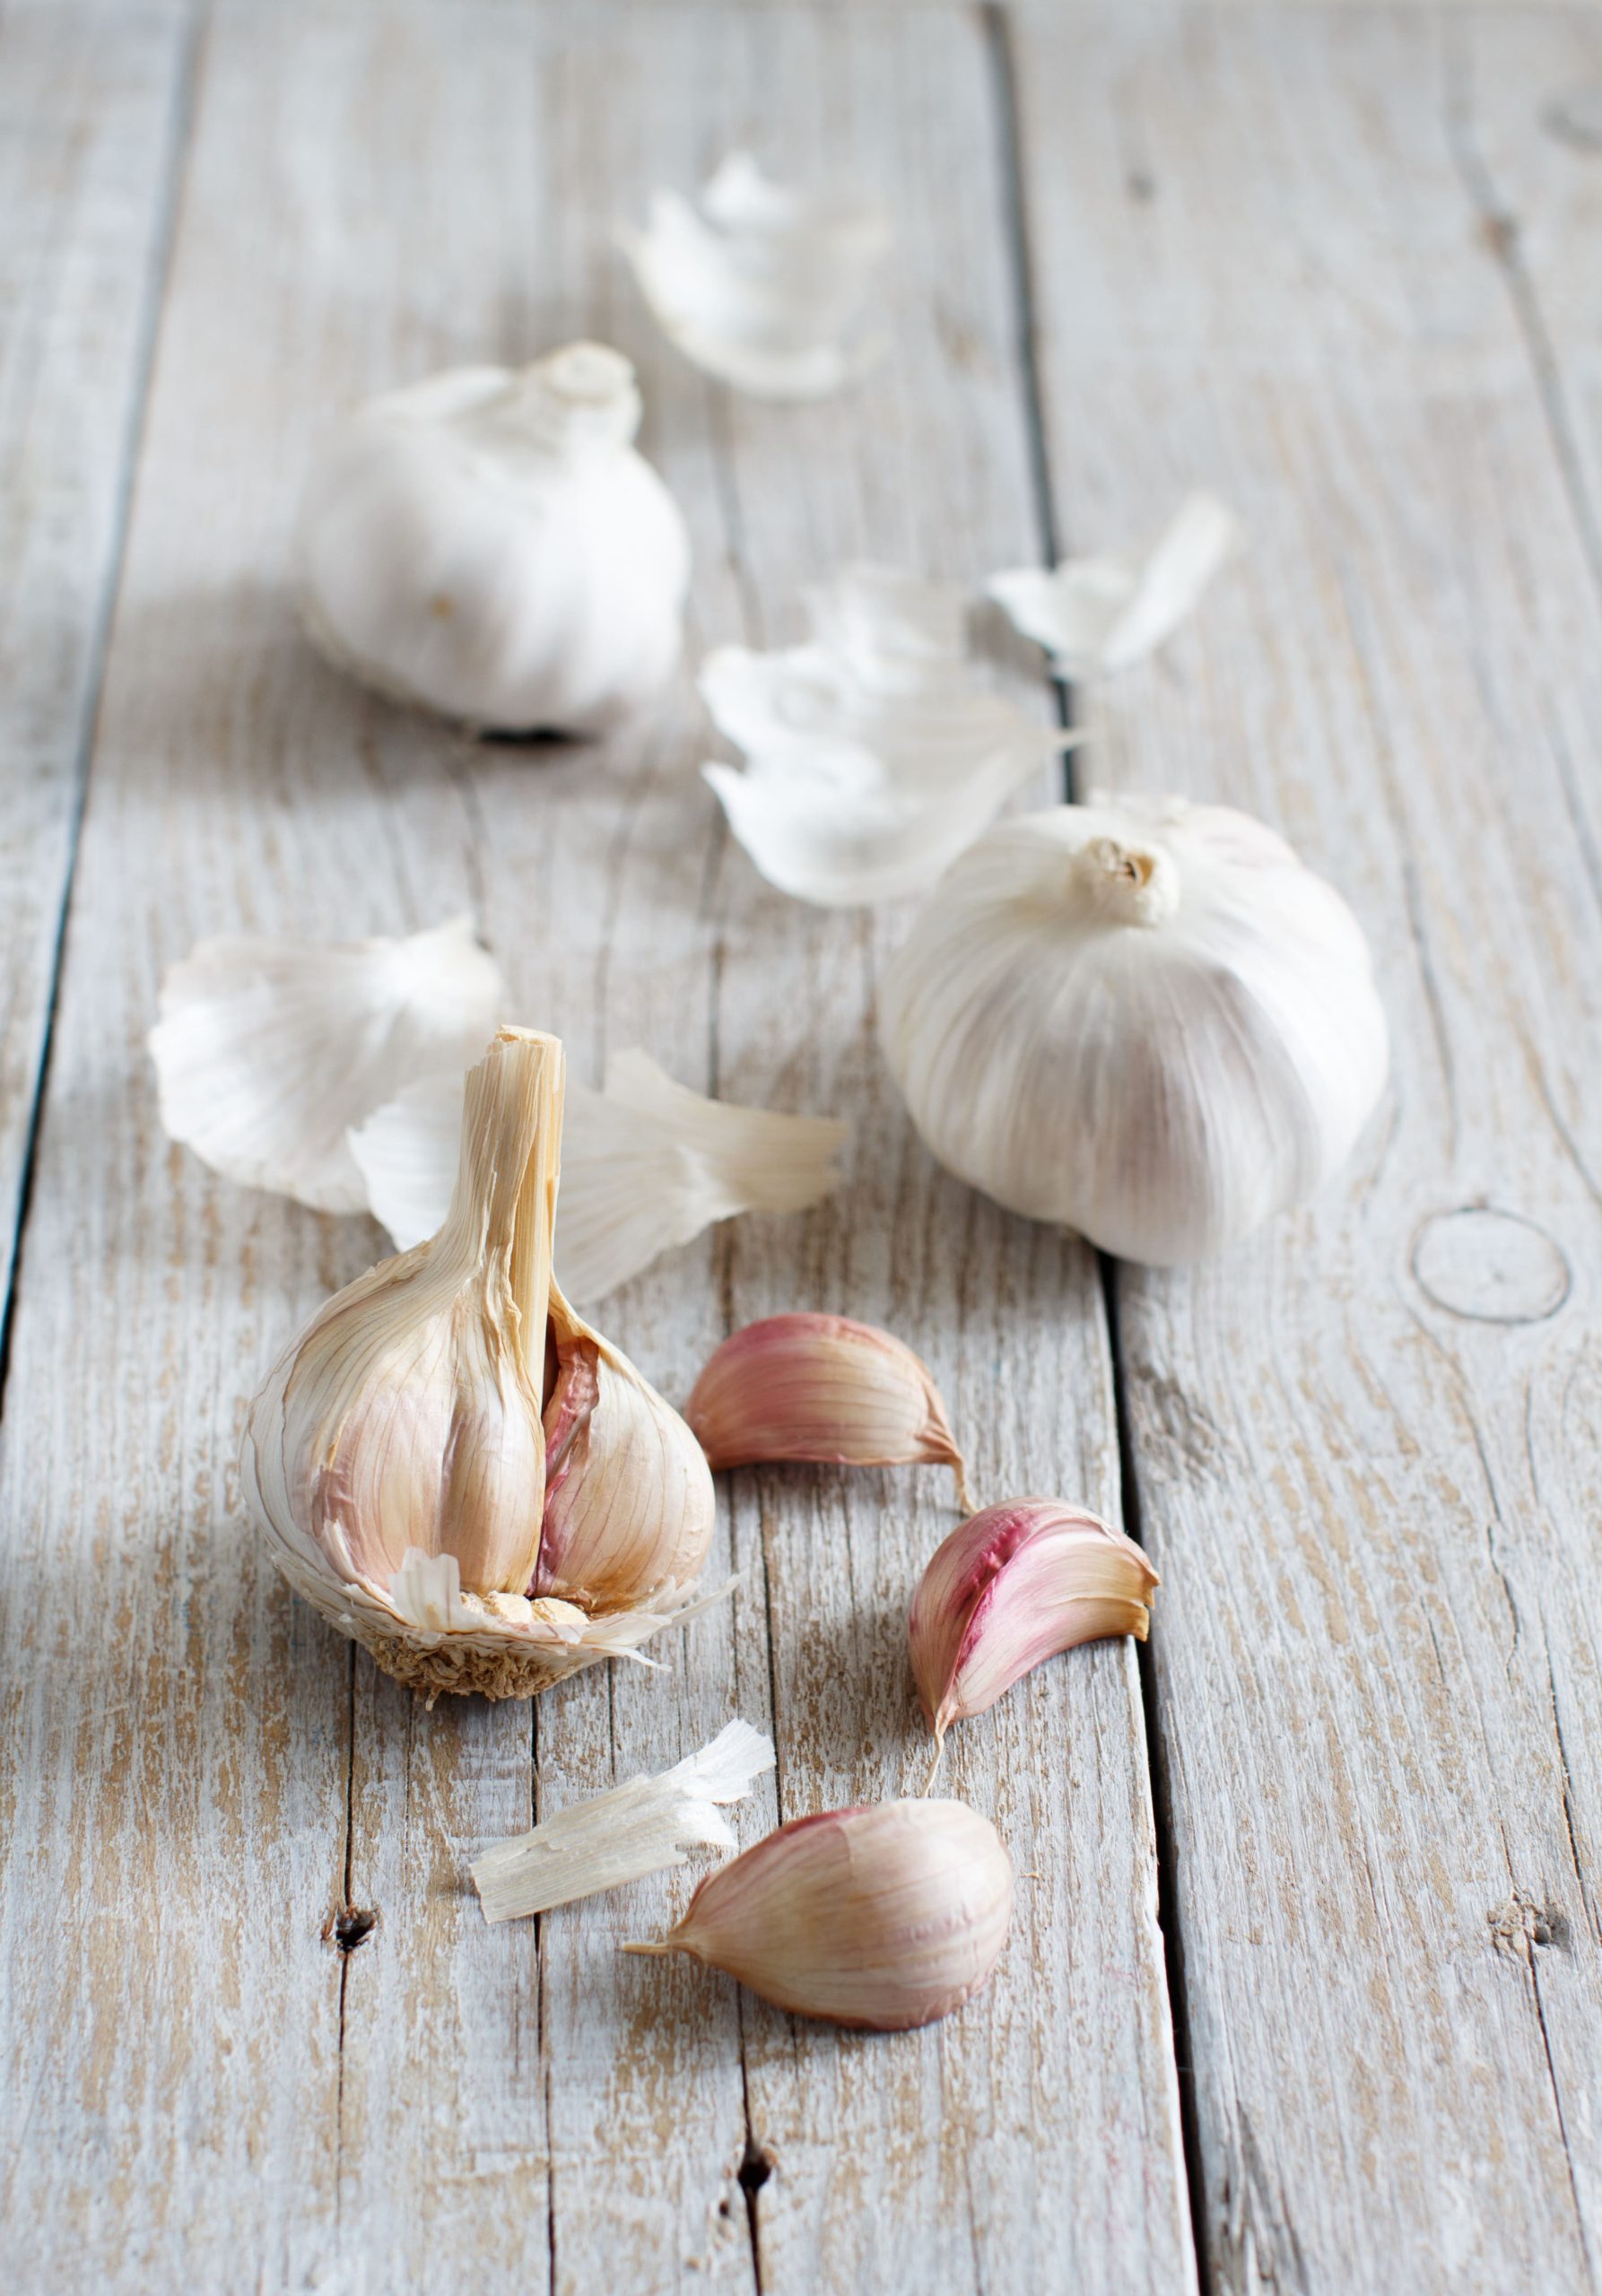 meet the heb garlic 4